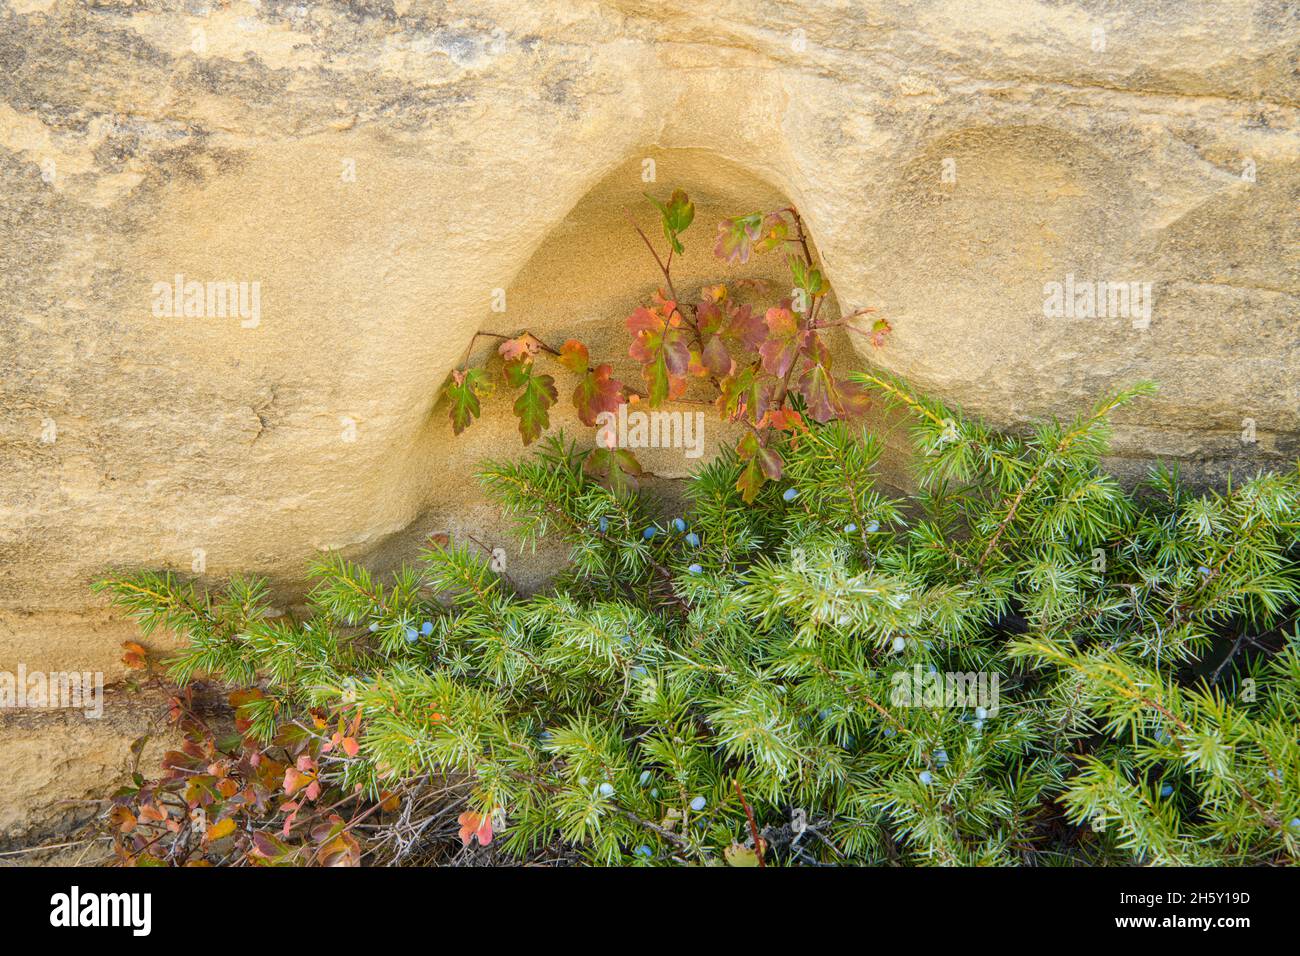 Creeping Juniper (Juniperus horizontalis) in the sandstone hoodoos, Writing on Stone Provincial Park, Alberta, Canada Stock Photo